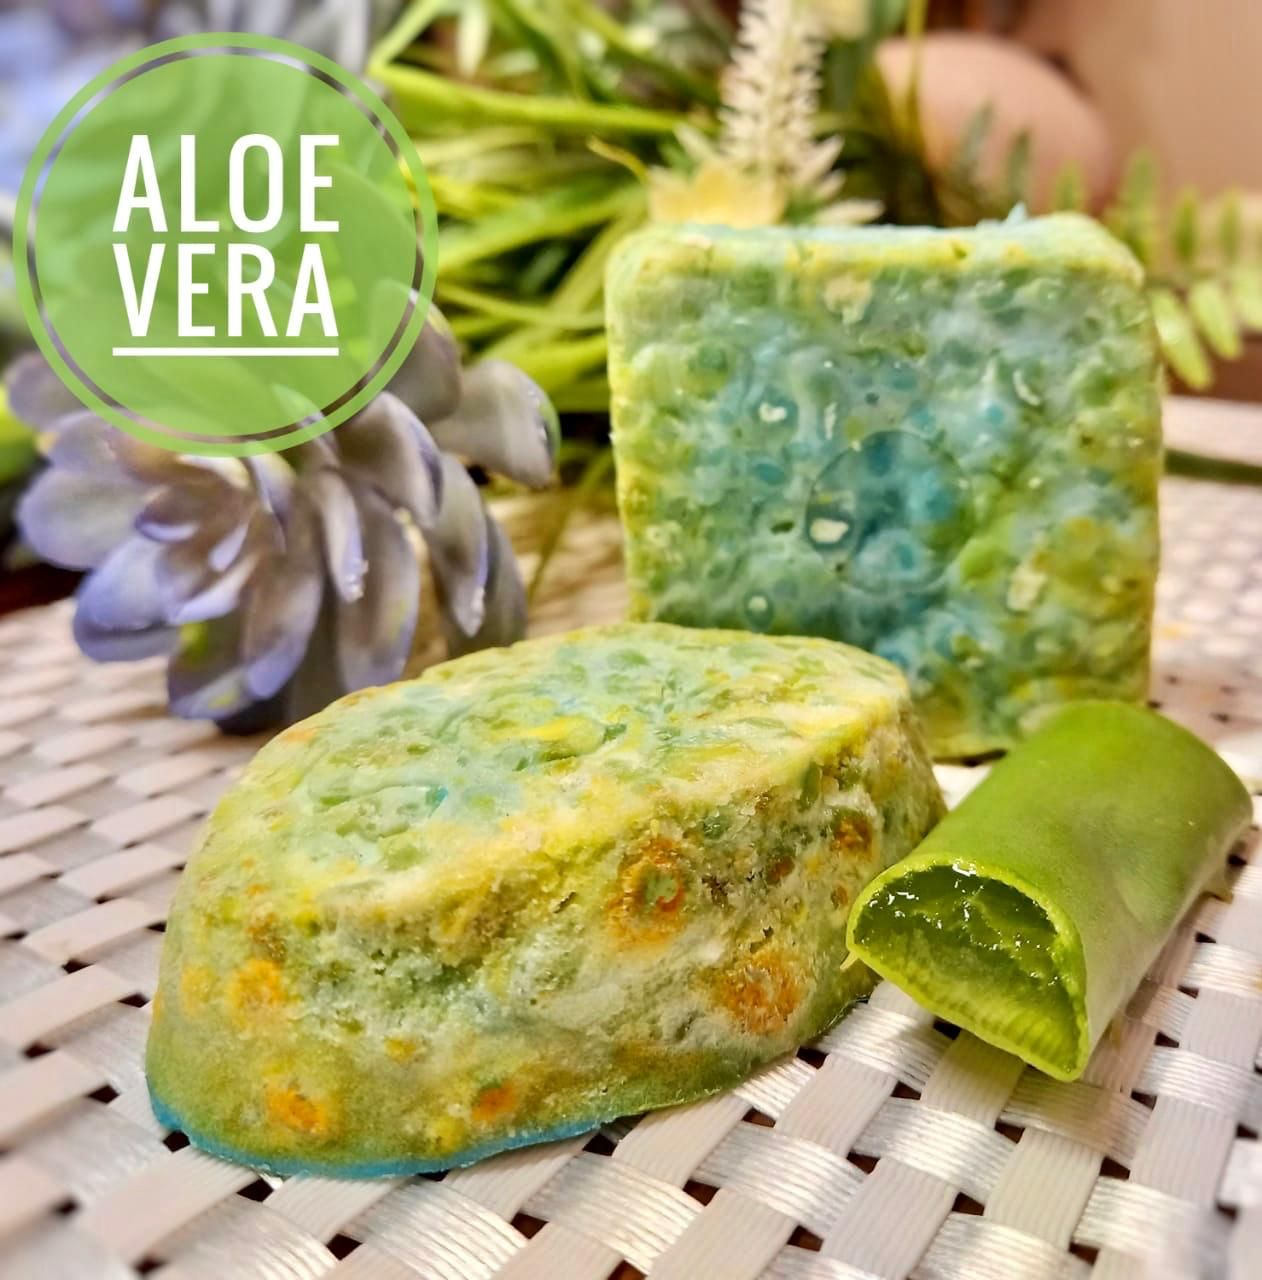 Fibre Life Special 100% organic Aloe Vera beauty soap and bath soap for oily skin vanishes scars and marks